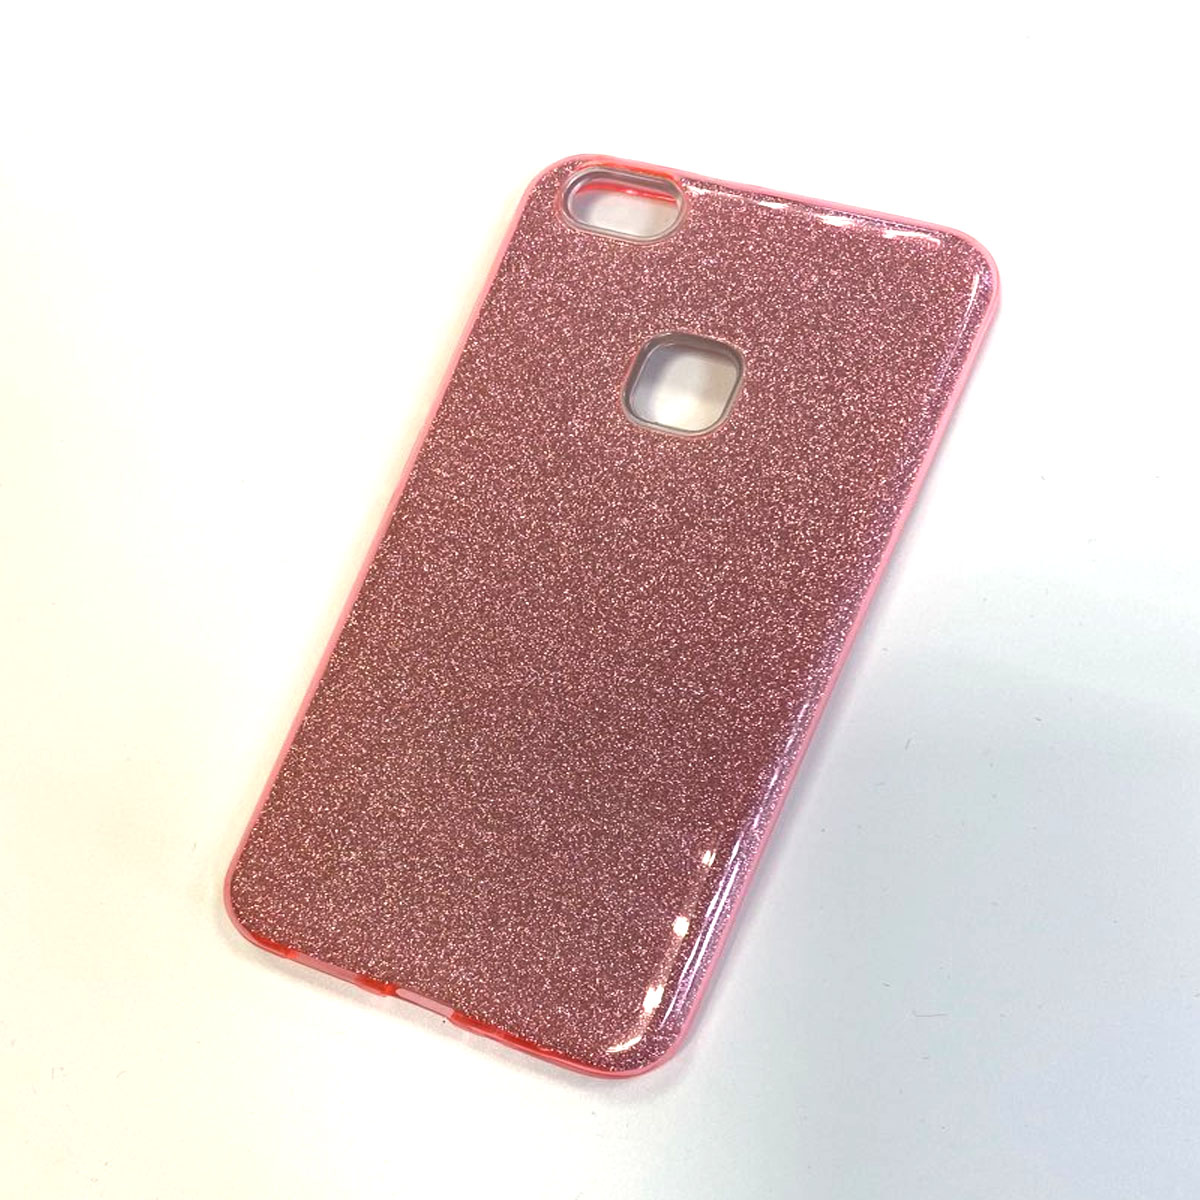 Чехол накладка для HUAWEI Honor P10 Lite, силикон, блестки, цвет розовый.